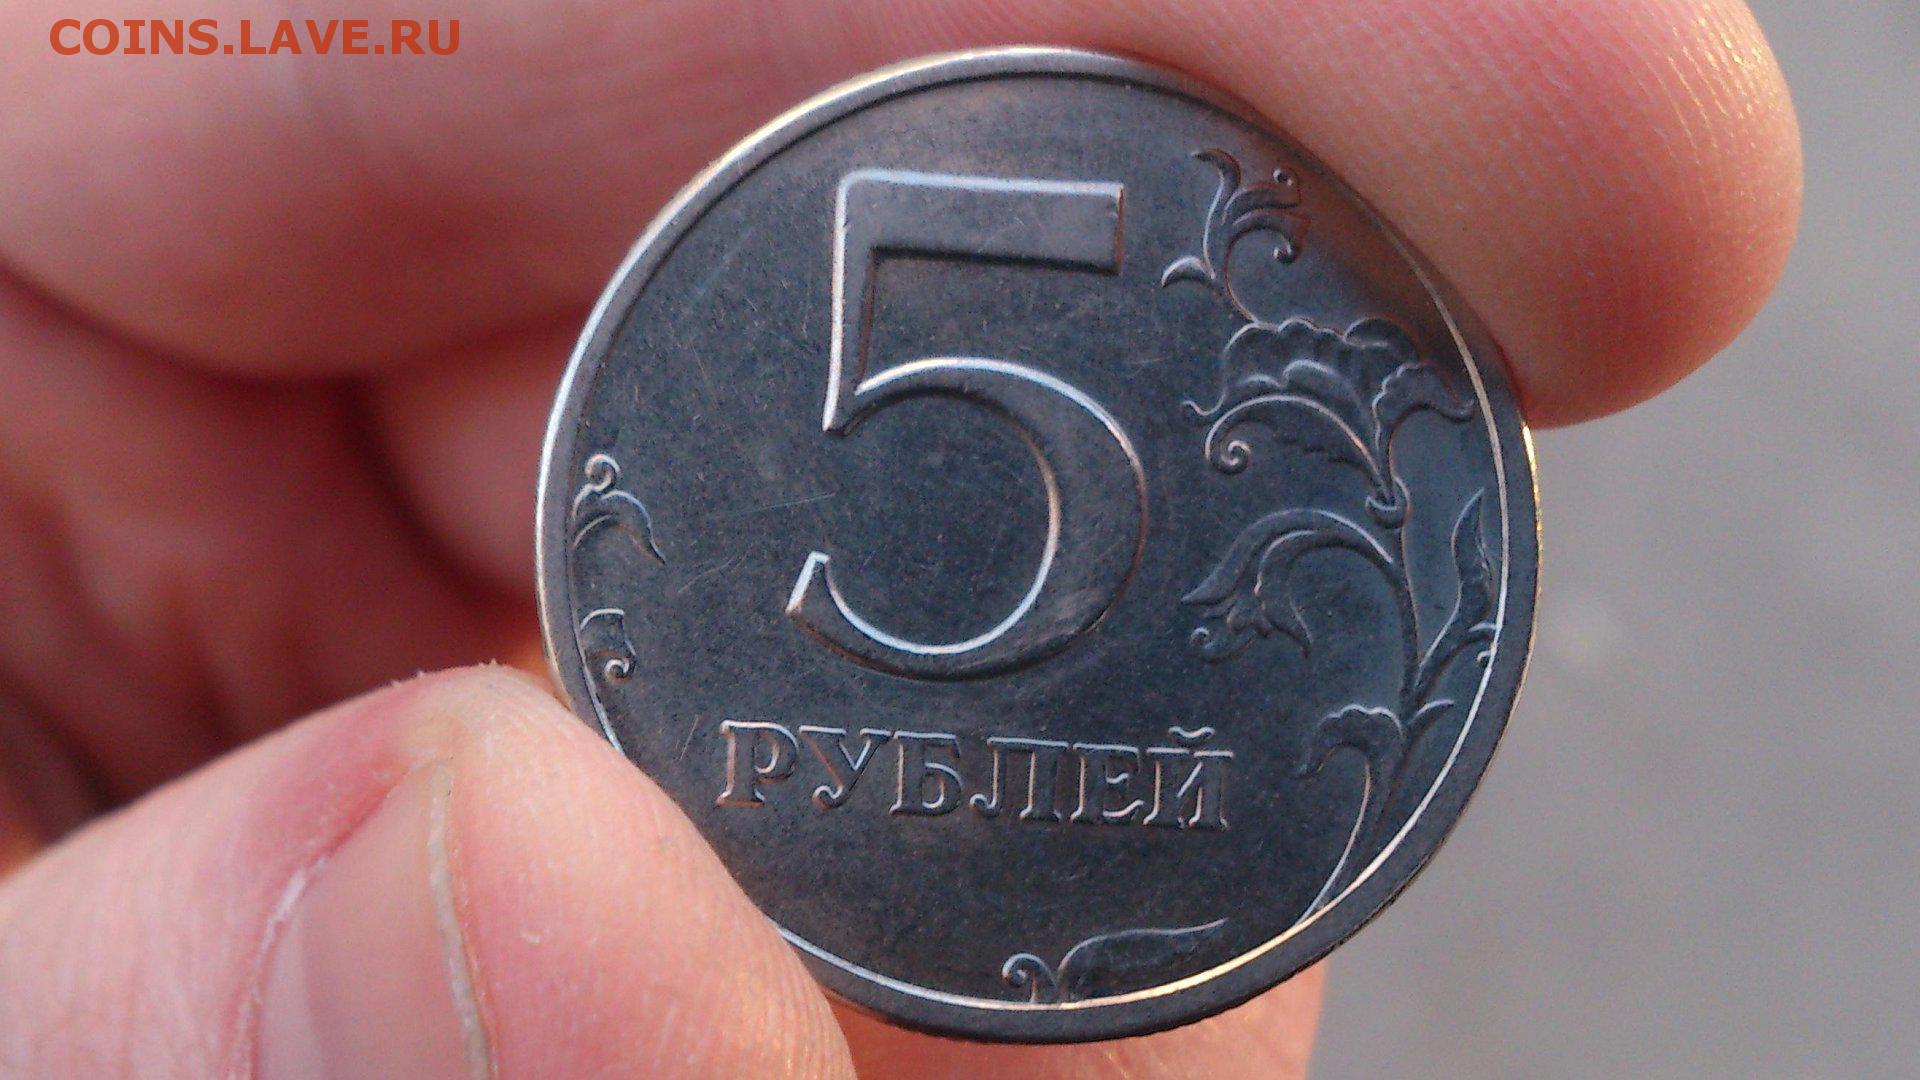 R 5 в рублях. Монеты. Монеты рубли. Монета 5 рублей в руке. Монетка 5 рублей.